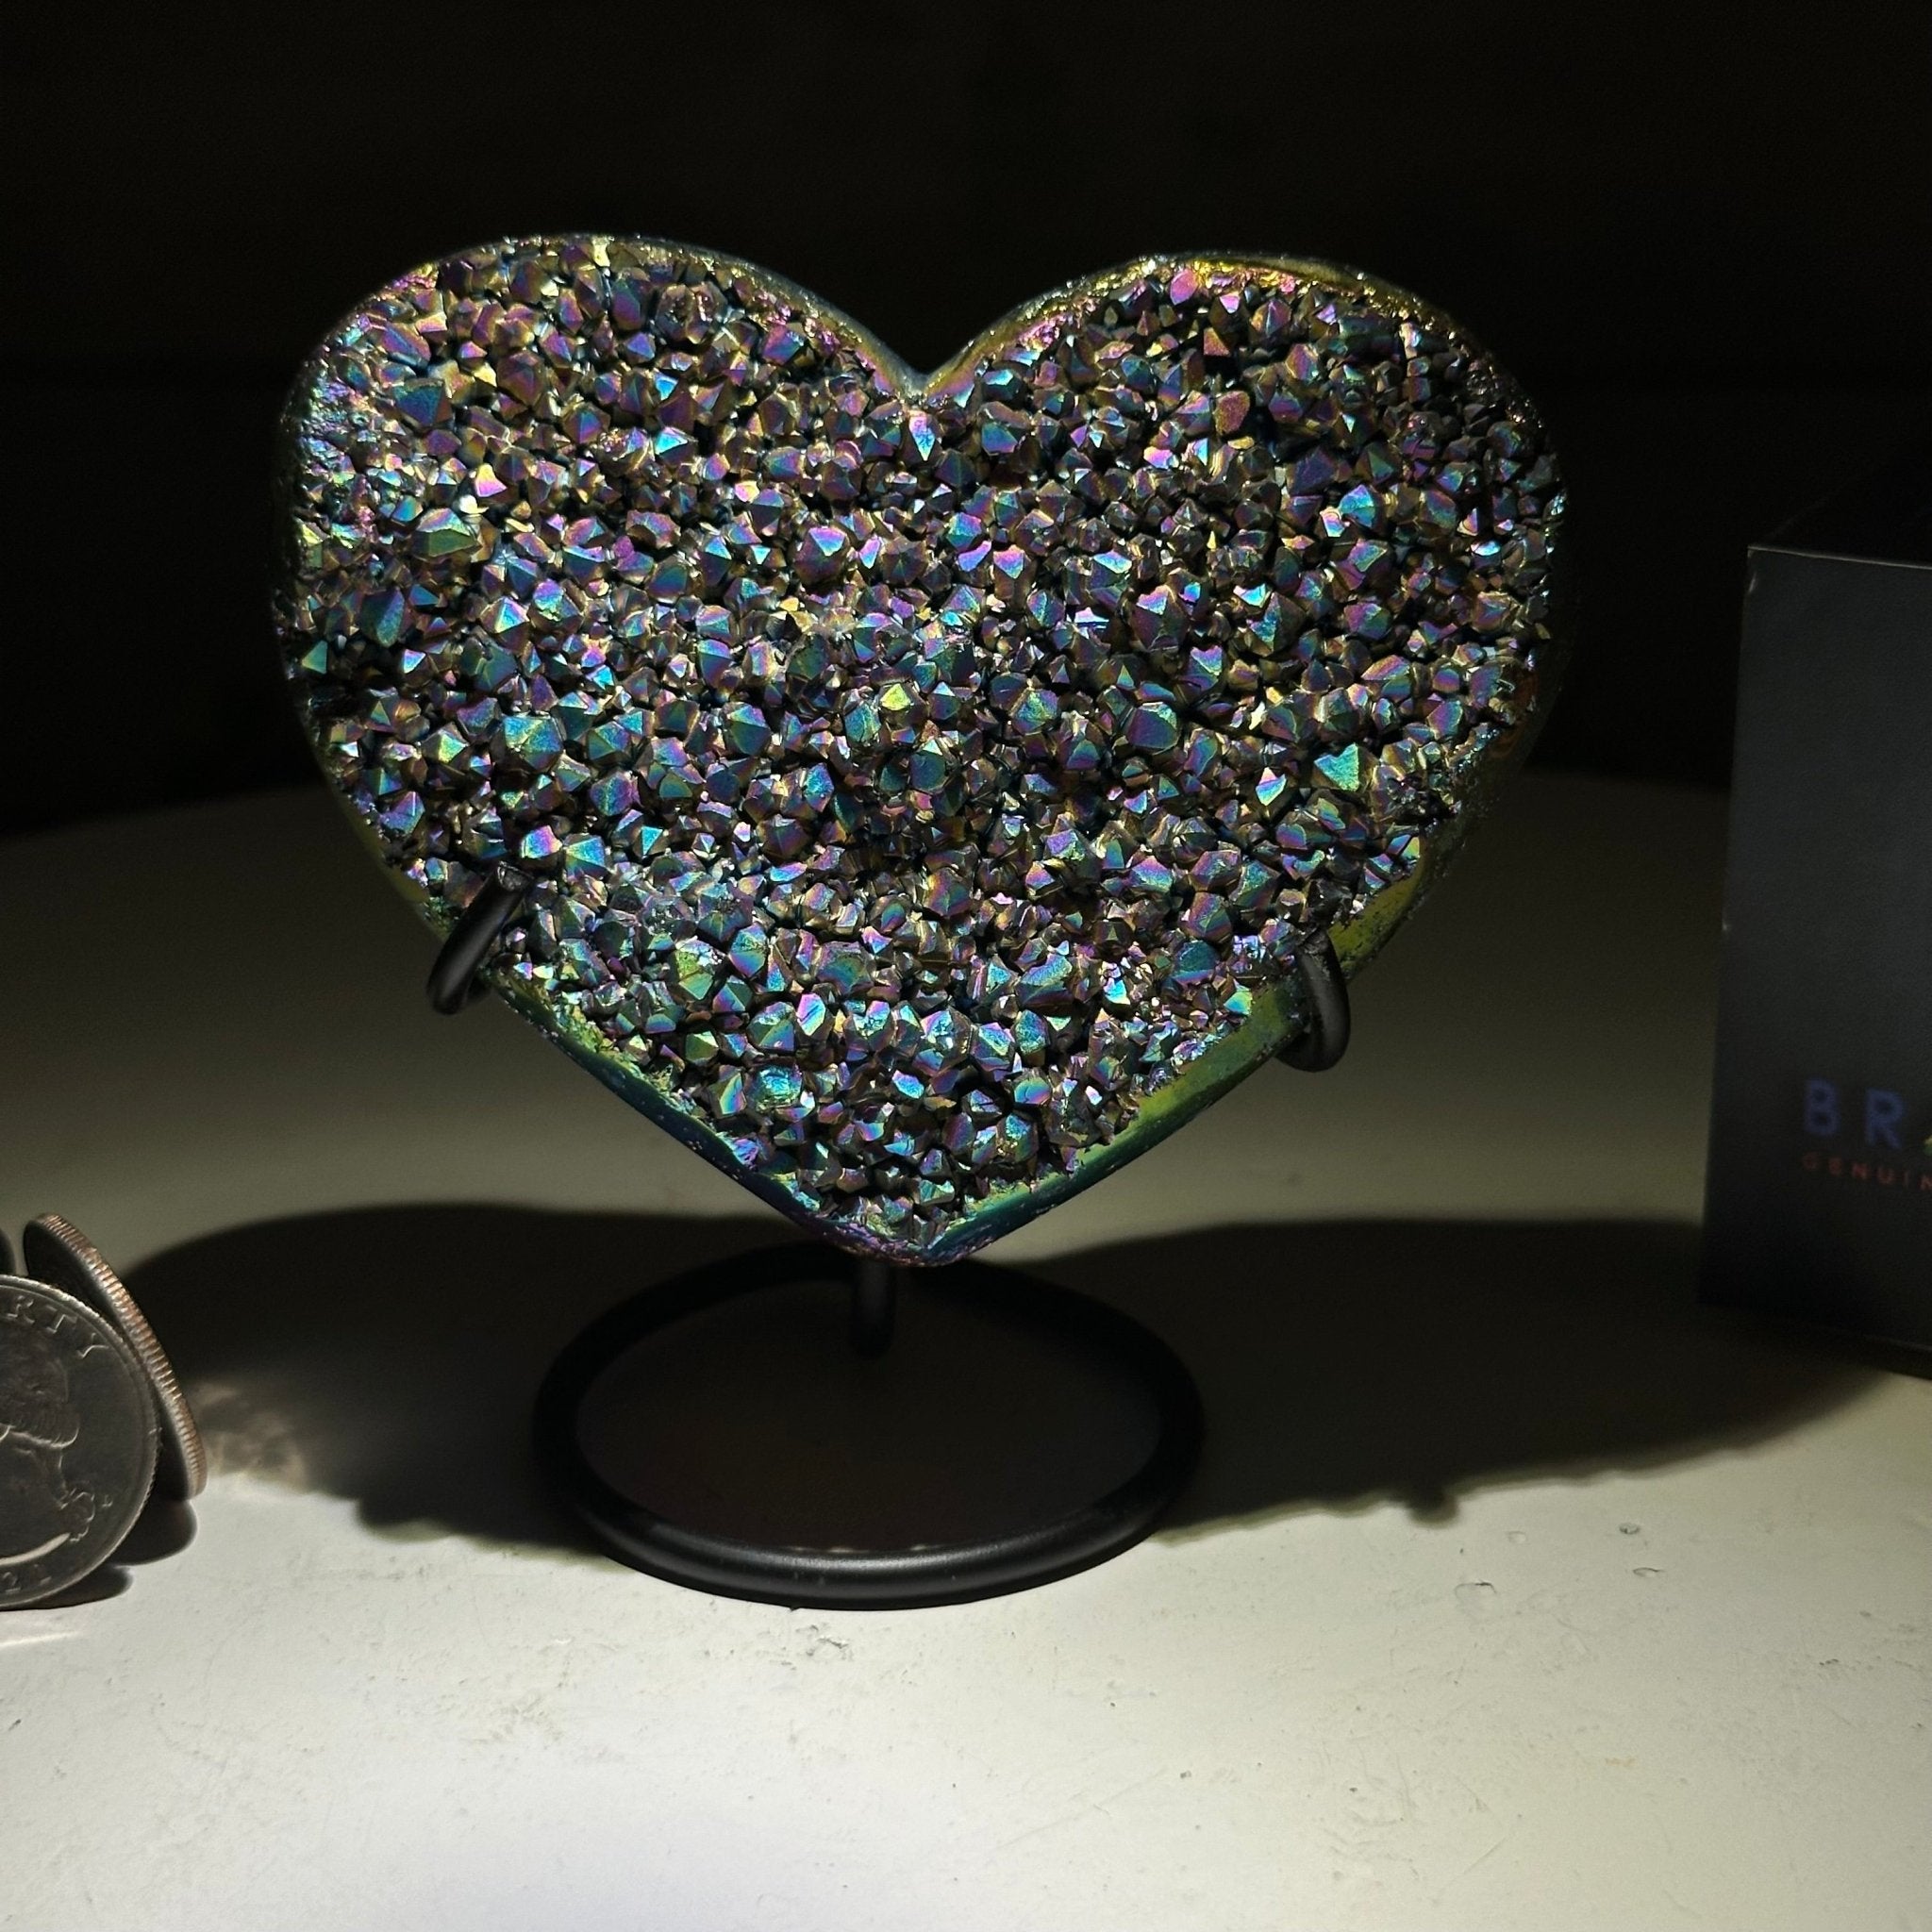 Rainbow Aura Amethyst Heart on a Metal Stand, 0.4 lbs & 3.8" Tall #5463RA-015 - Brazil GemsBrazil GemsRainbow Aura Amethyst Heart on a Metal Stand, 0.4 lbs & 3.8" Tall #5463RA-015Hearts5463RA-015